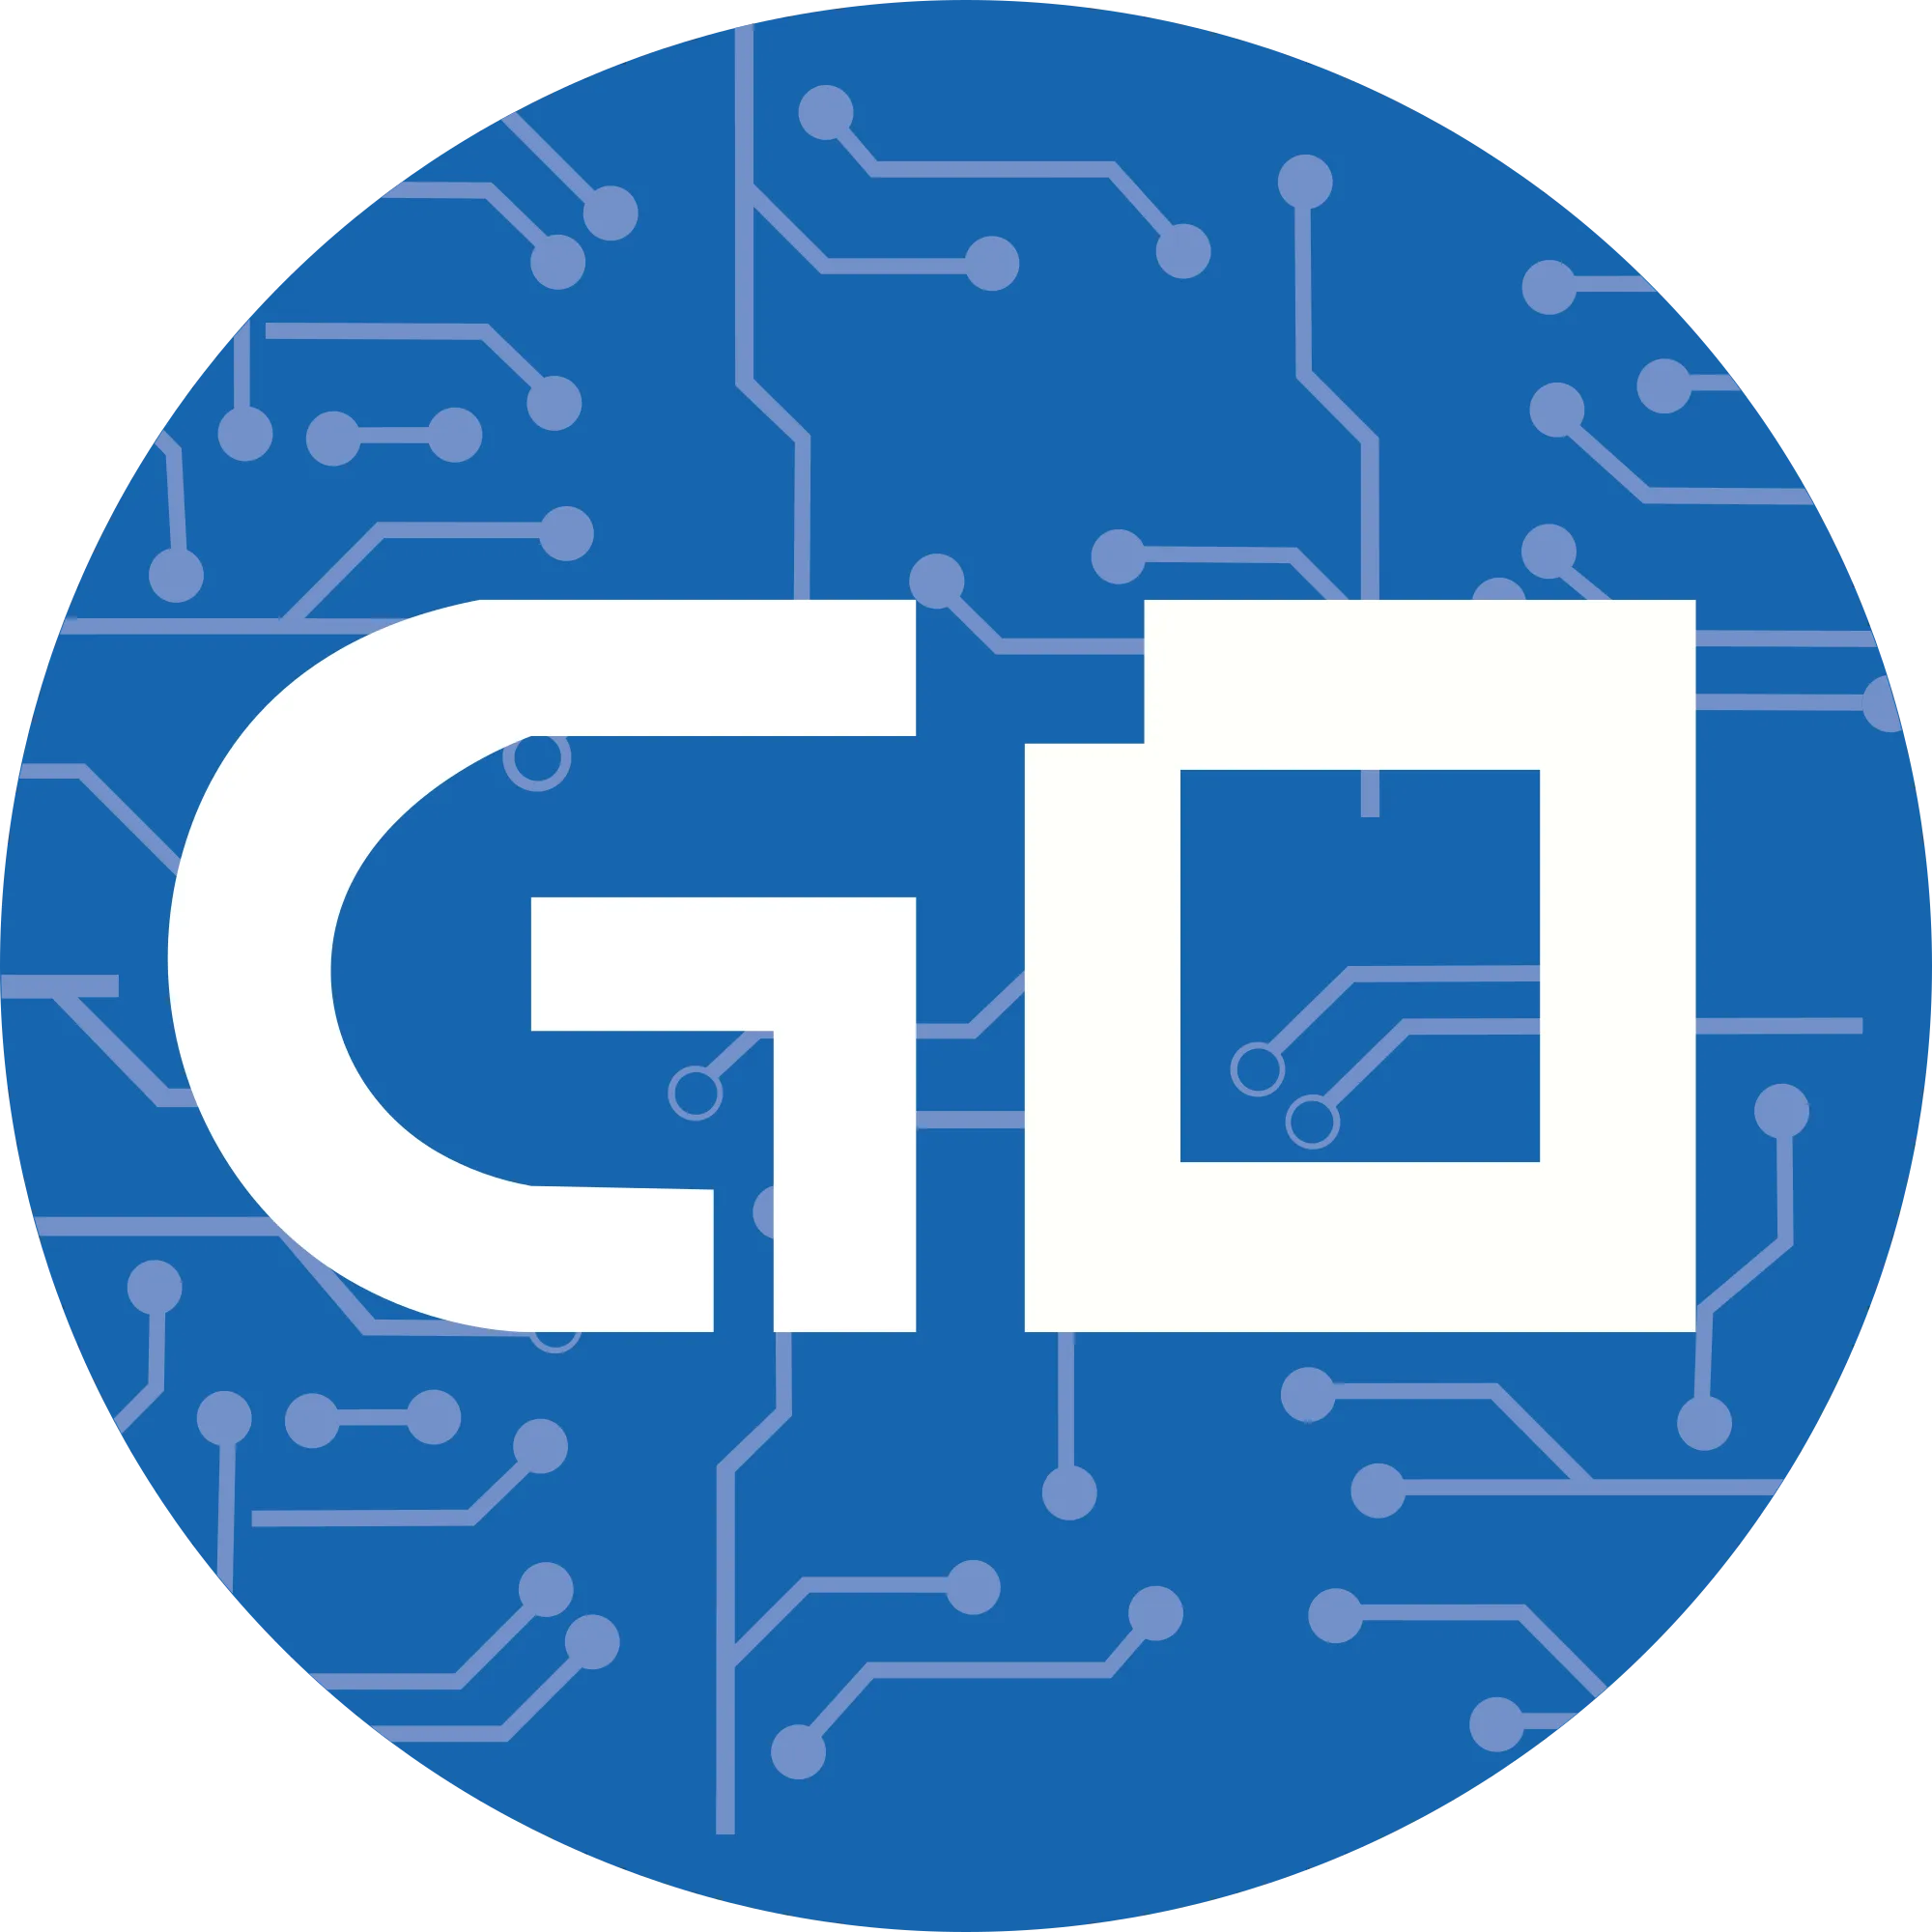 GoByte (GBX) logo